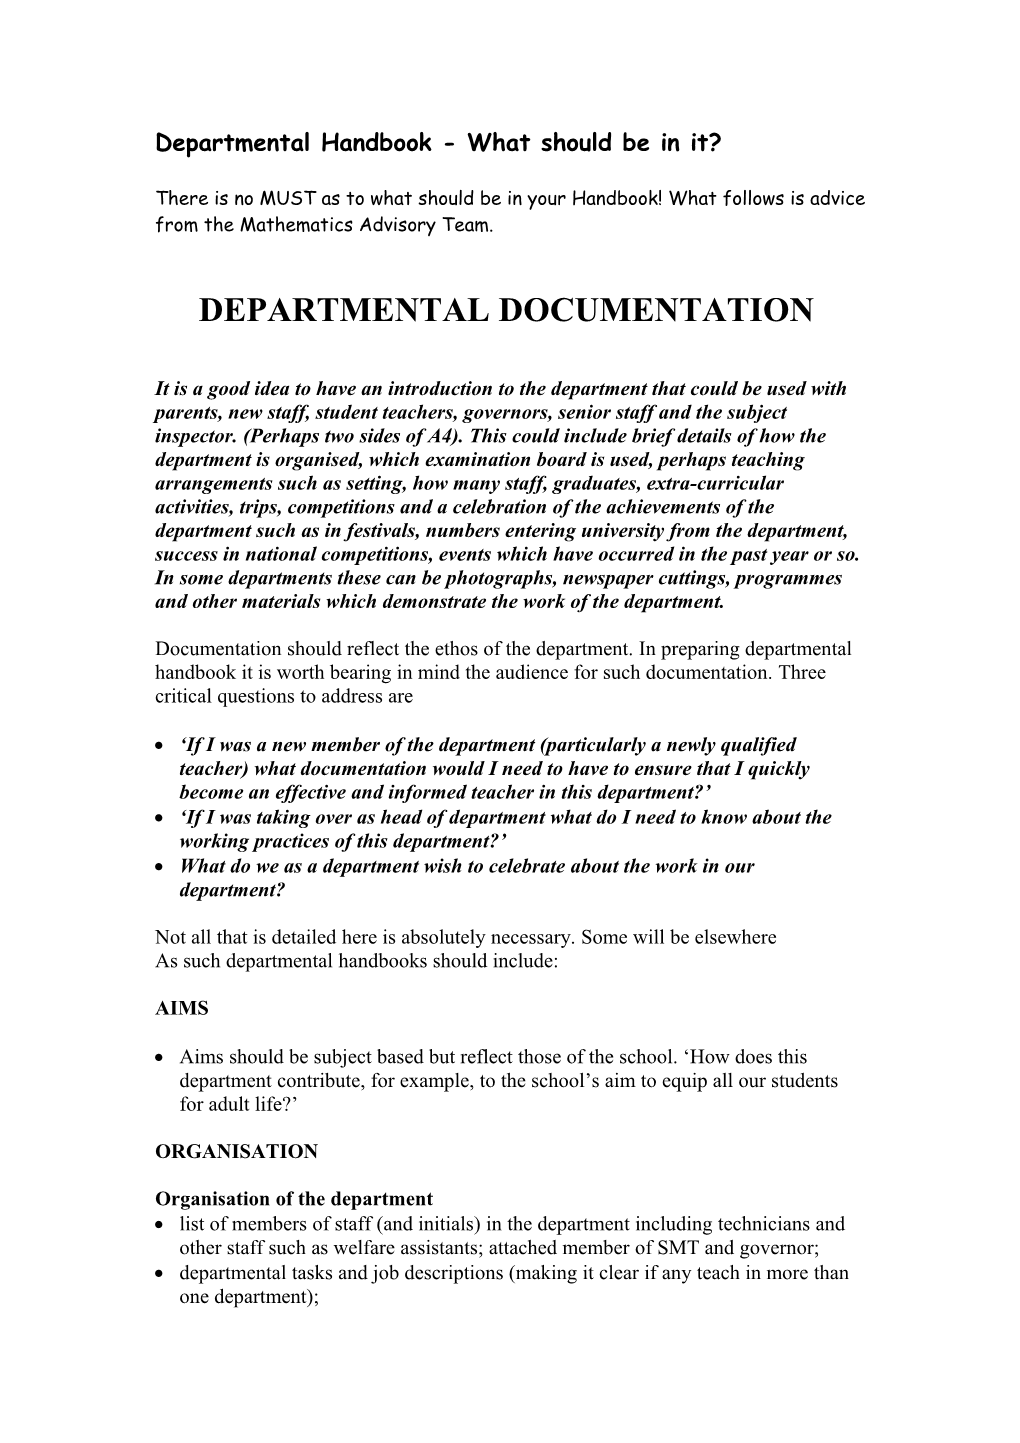 Departmental Handbook - What Should Go in It?